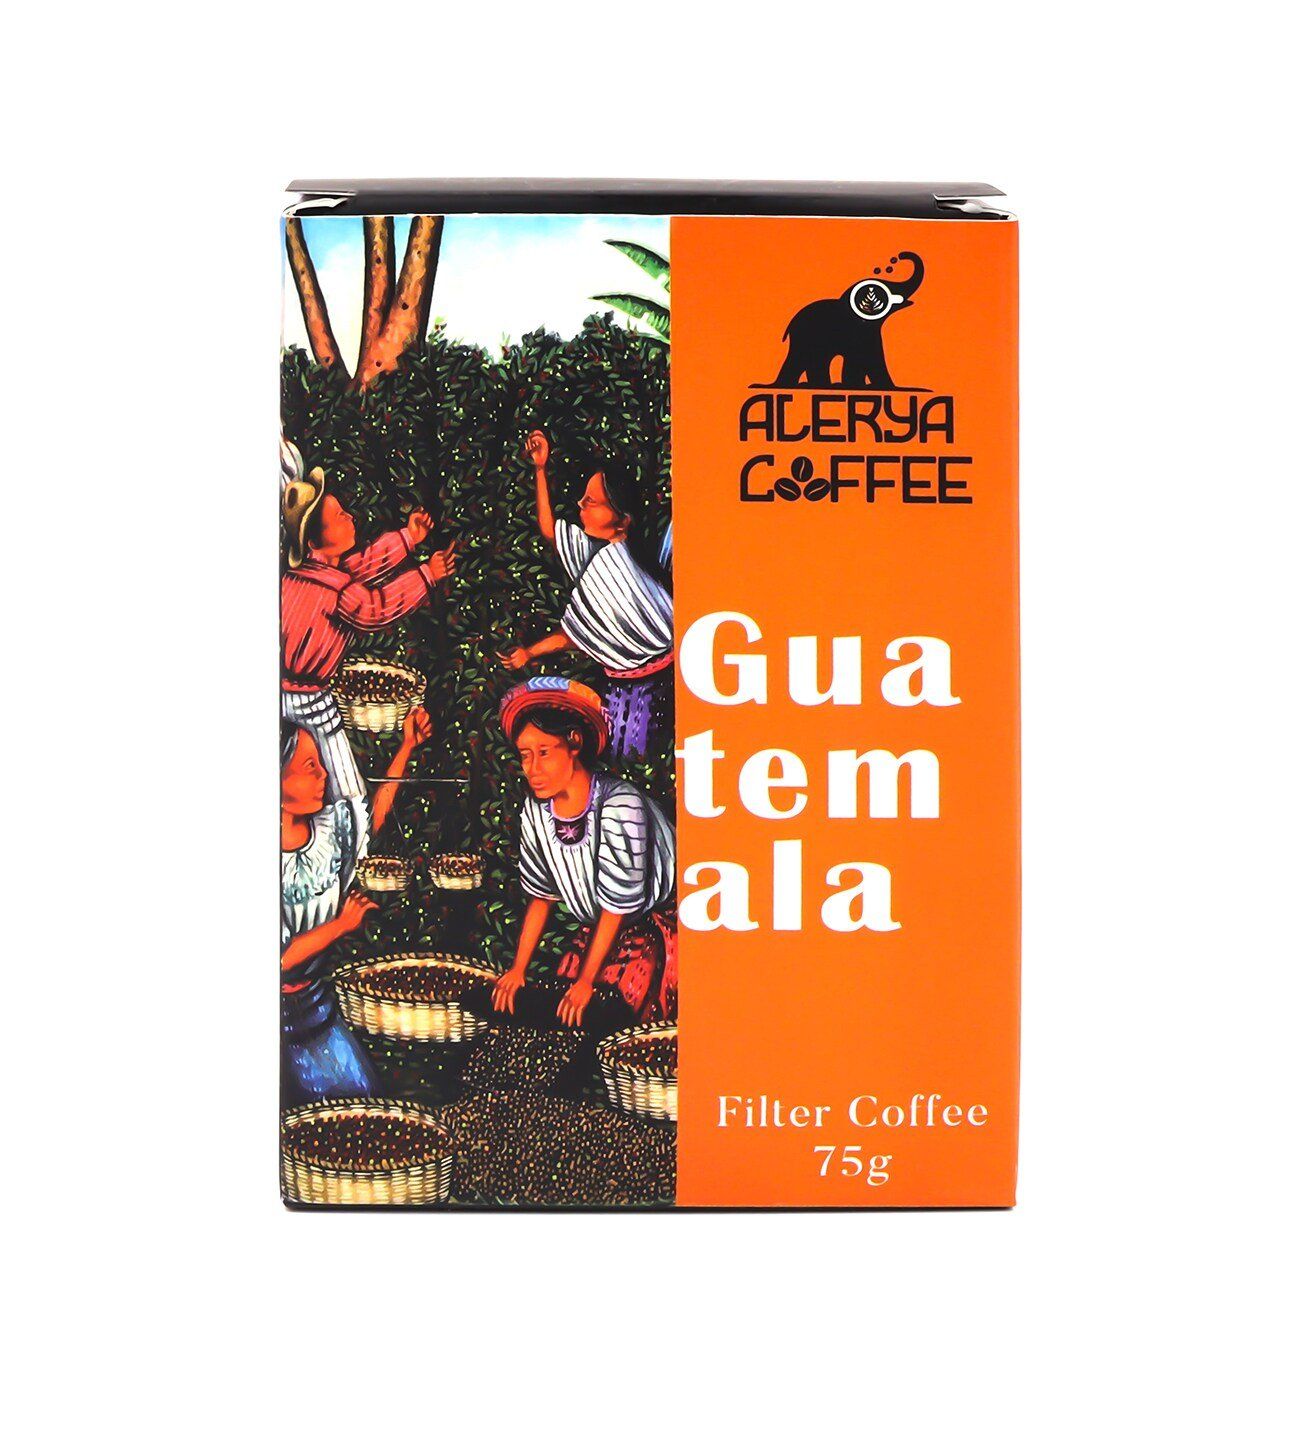 Turuncu Kupa & Siyah French Press & Alerya Guatemala Filtre Kahve Hediye Seti #4